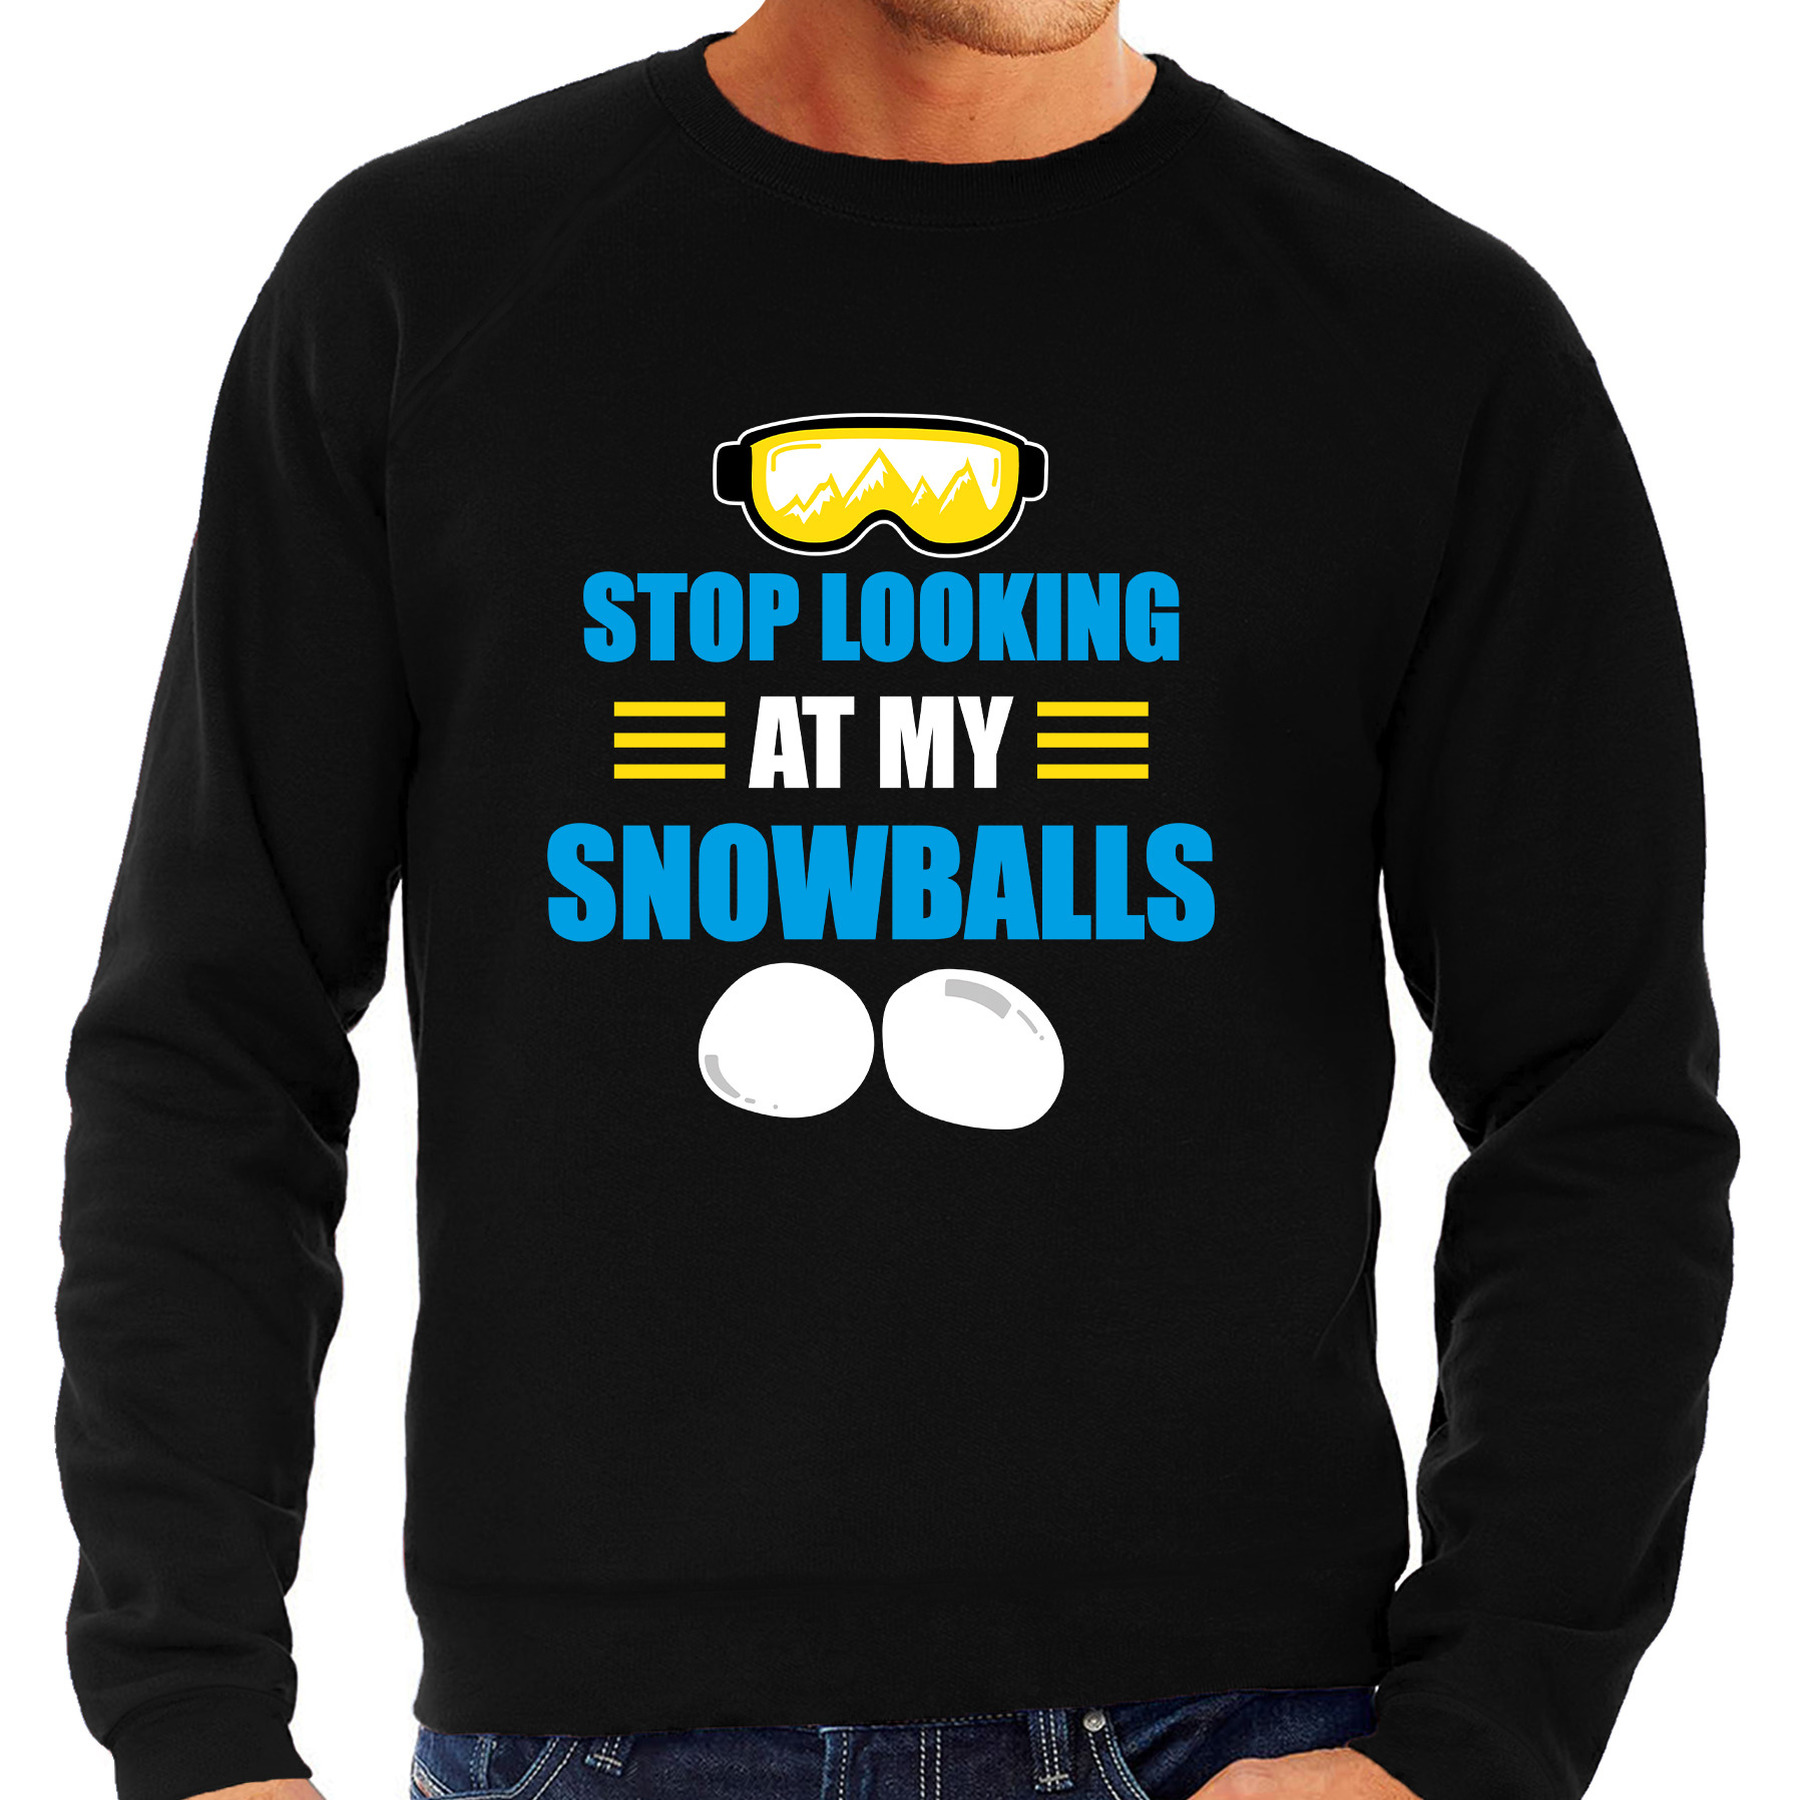 Apres ski trui Stop looking at my snowballs zwart heren Wintersport sweater Foute apres ski out